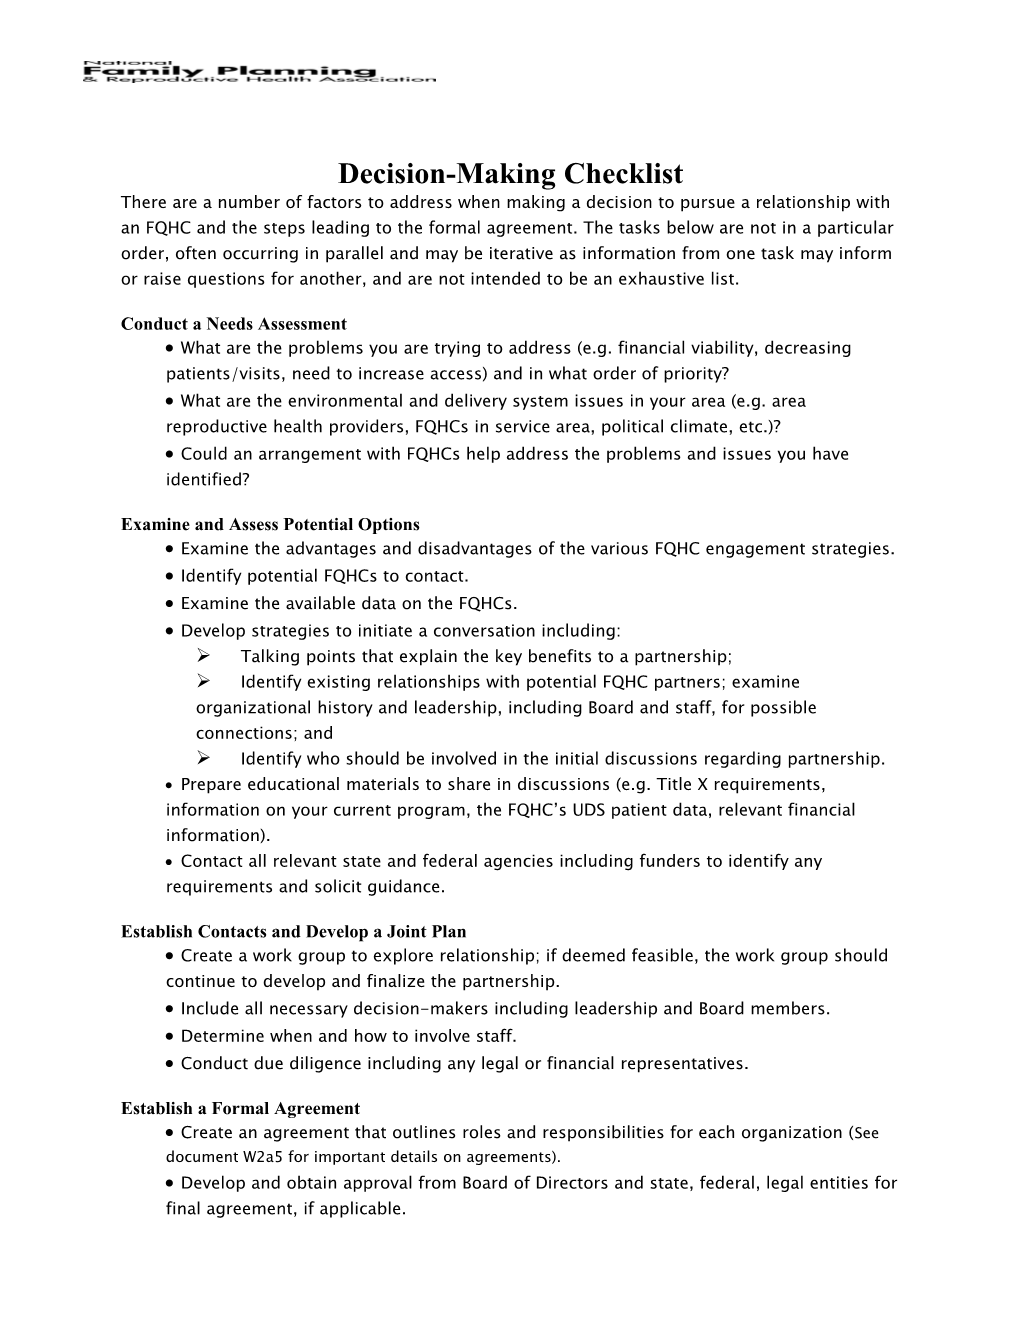 Decision-Making Checklist